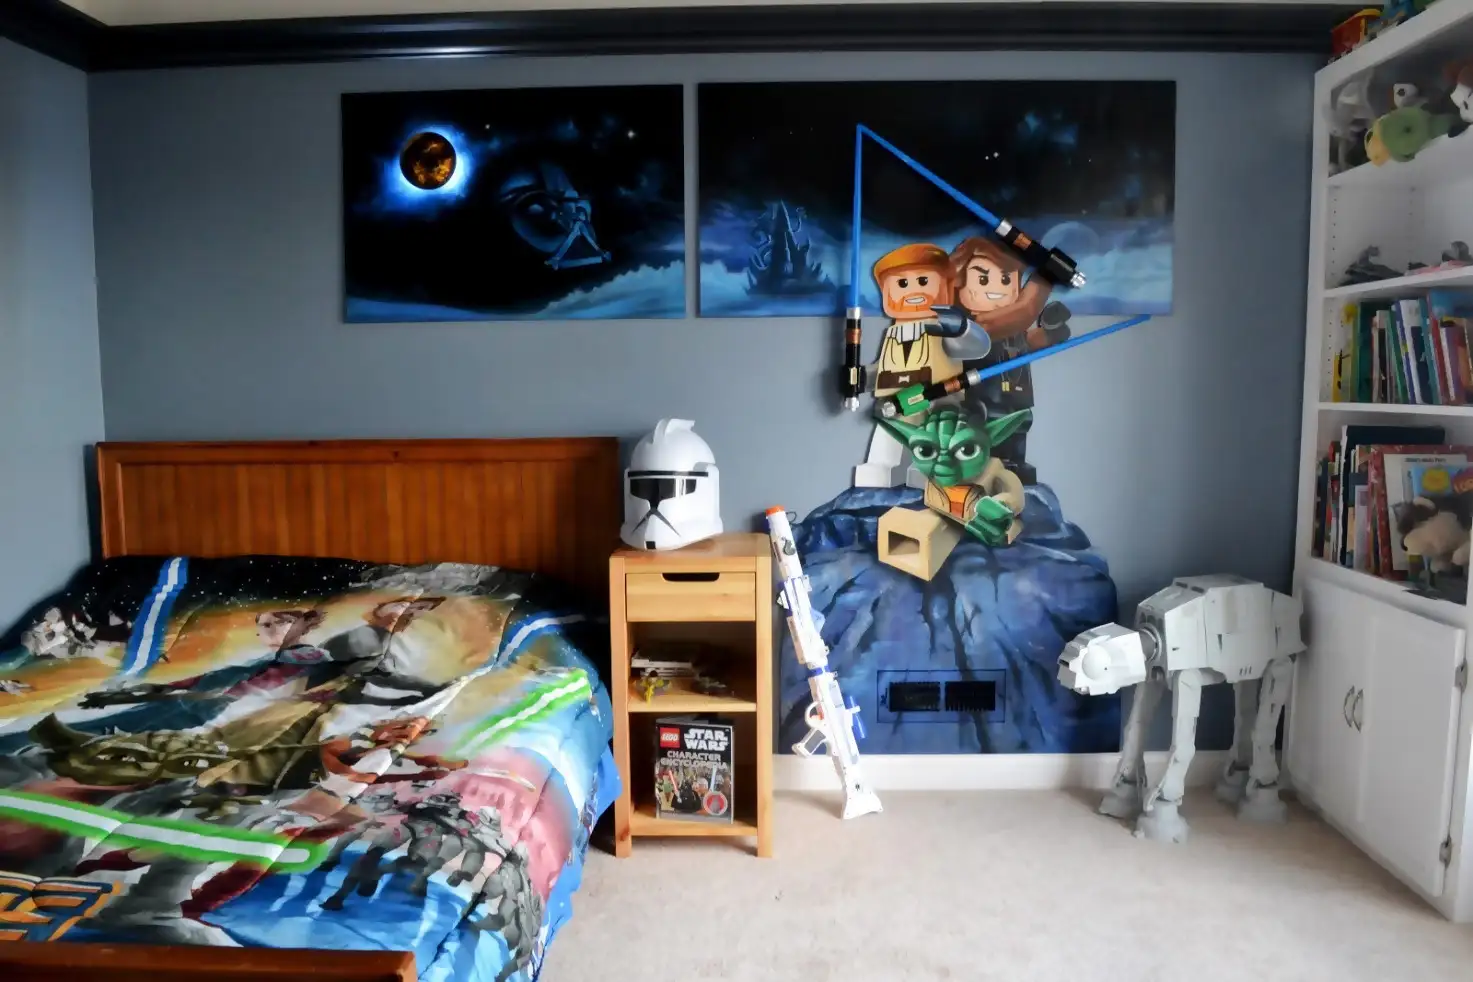 Cool Star Wars Bedroom Décor Ideas